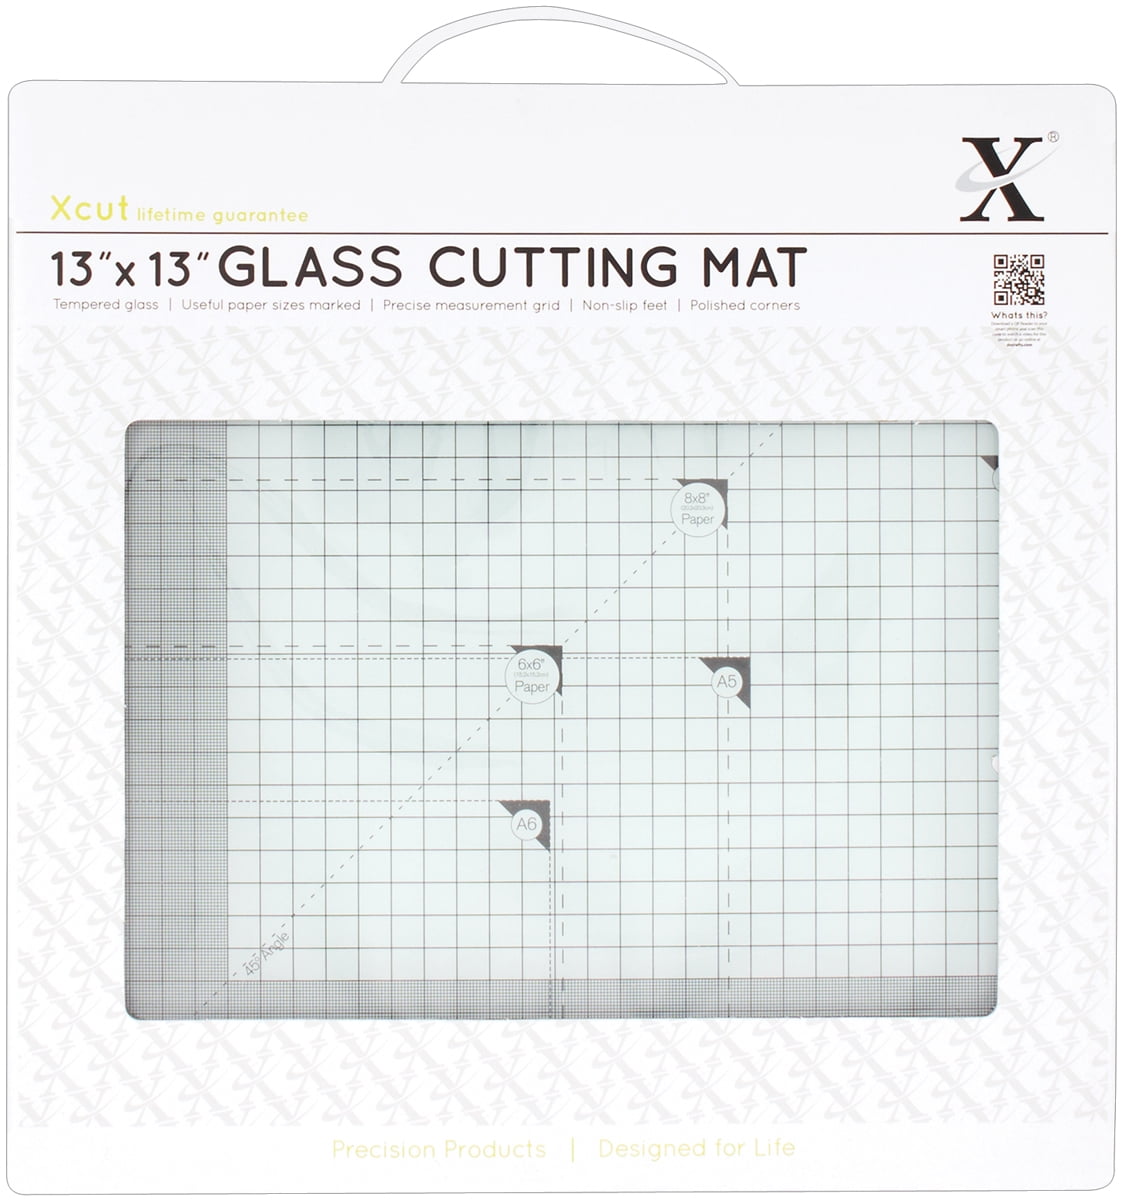 Xcut Tempered Glass Cutting Mat -13X13 